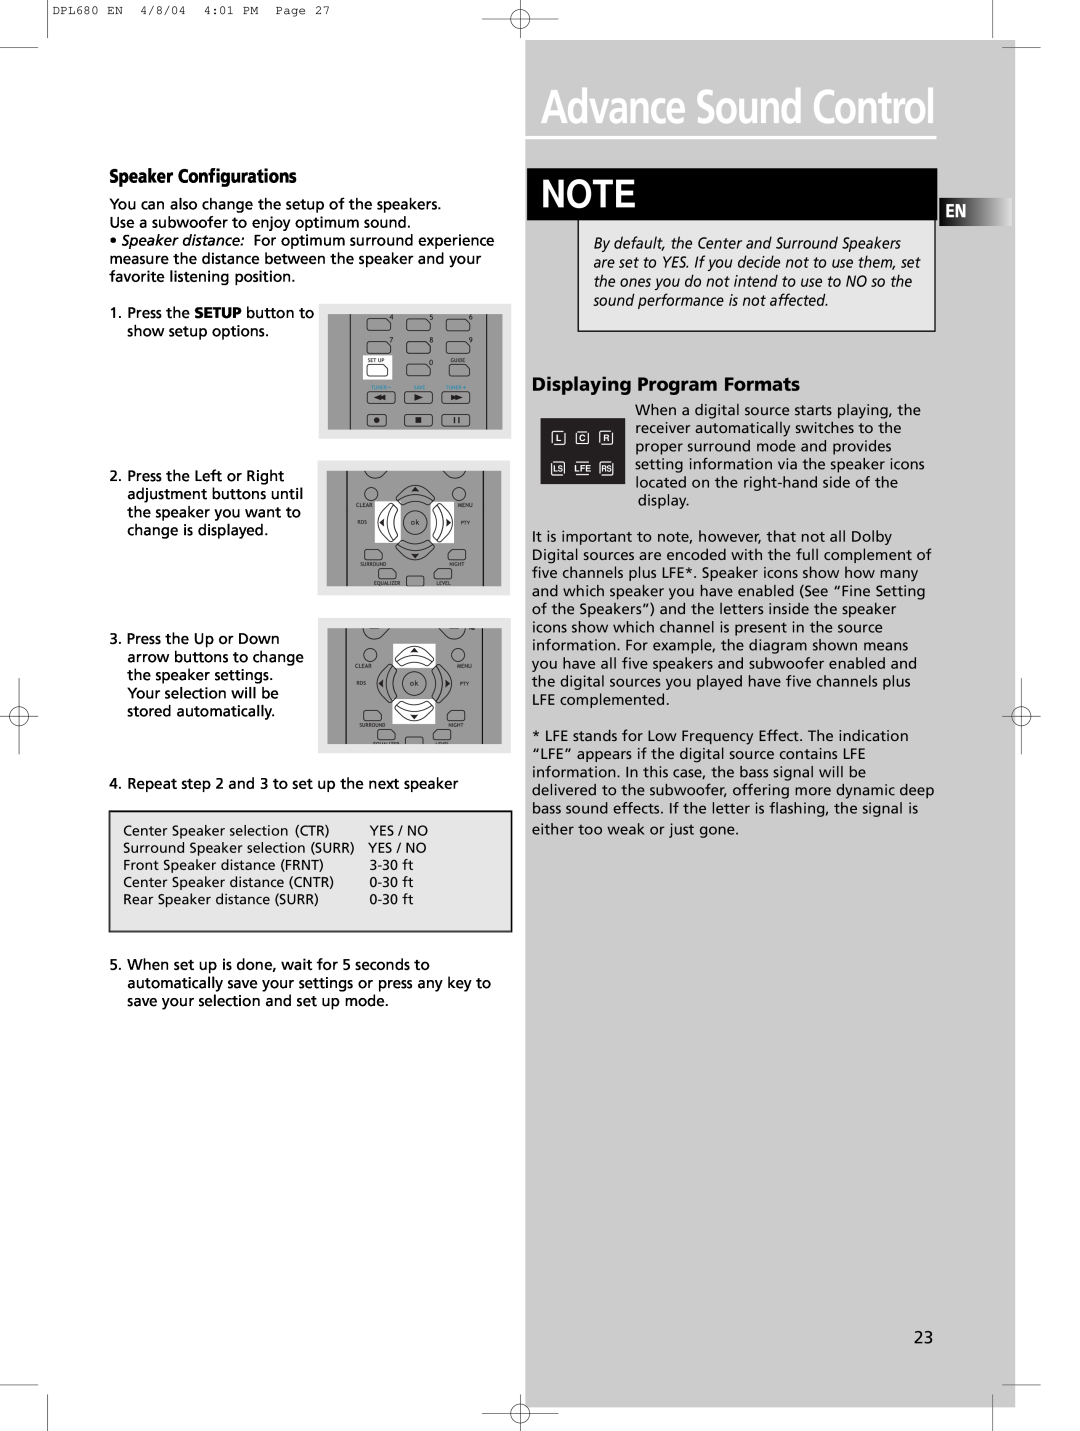 Technicolor - Thomson DPL680 manual Noteen, Speaker Configurations, Displaying Program Formats, Advance Sound Control 